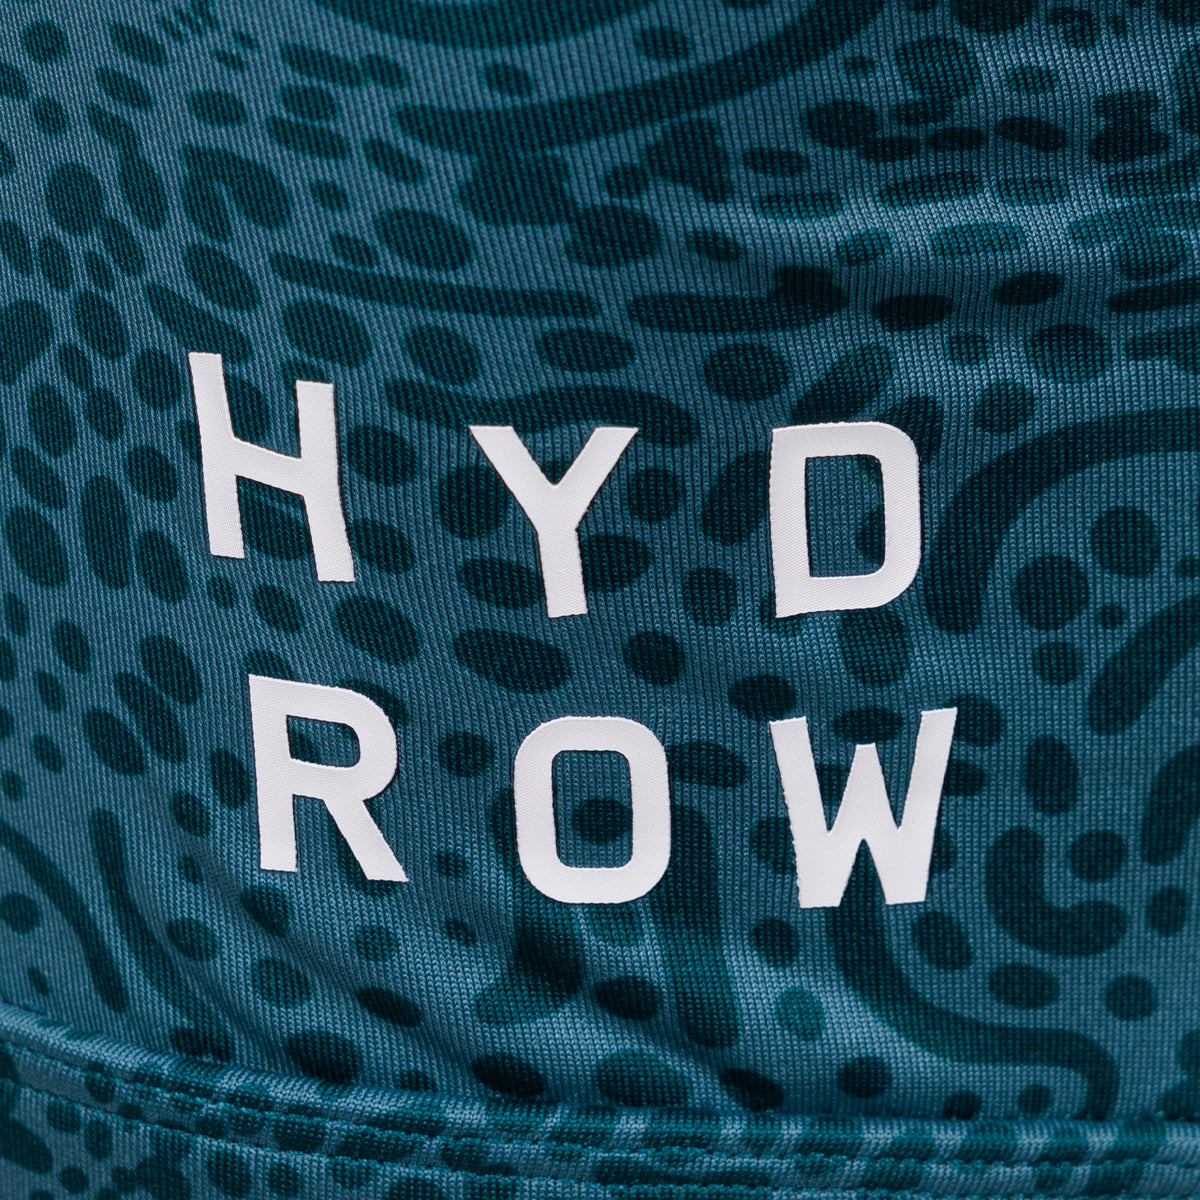 hydrow logo on spotted shark pattern bra